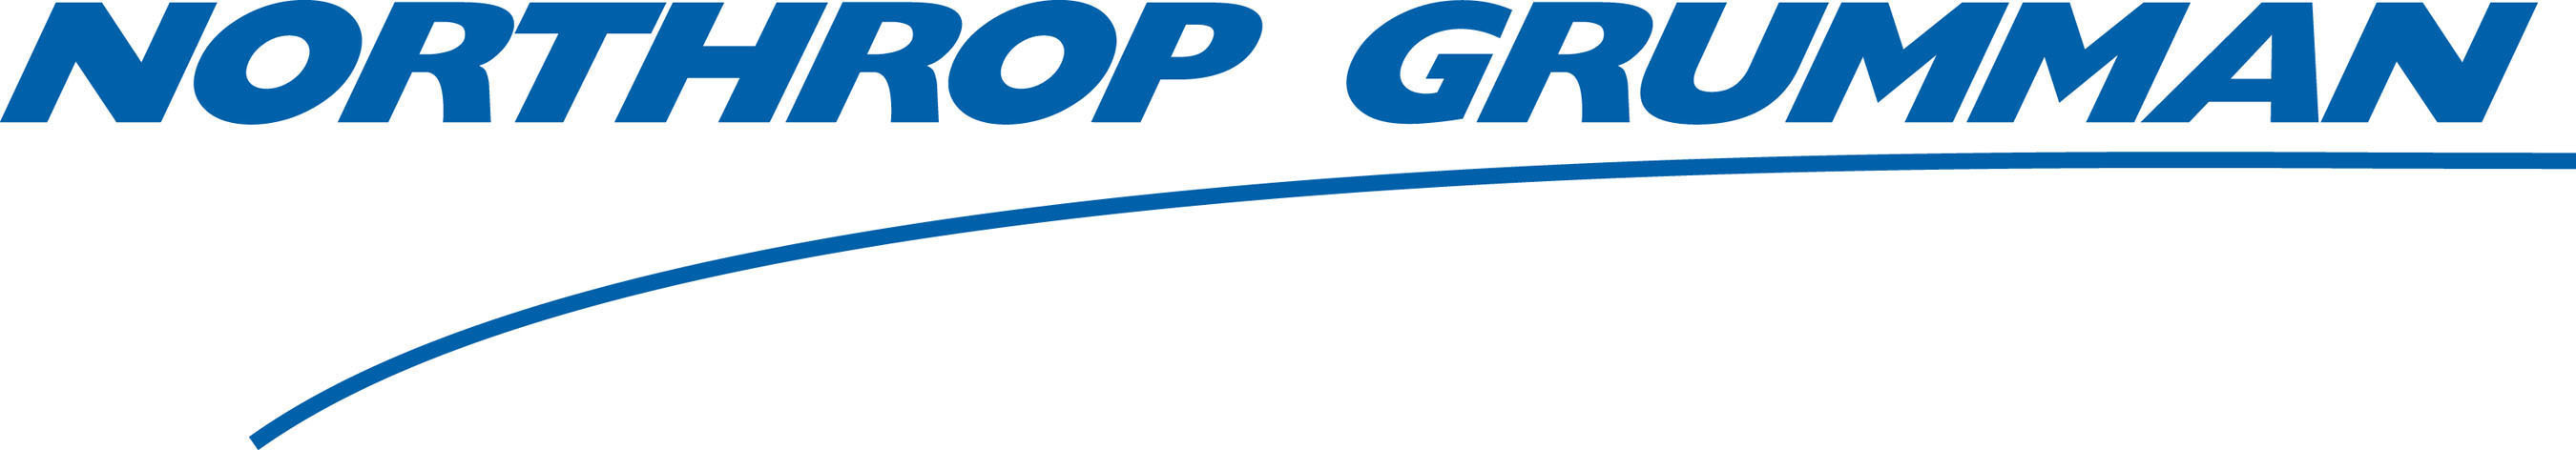 Northrop Grumman Corporation logo.